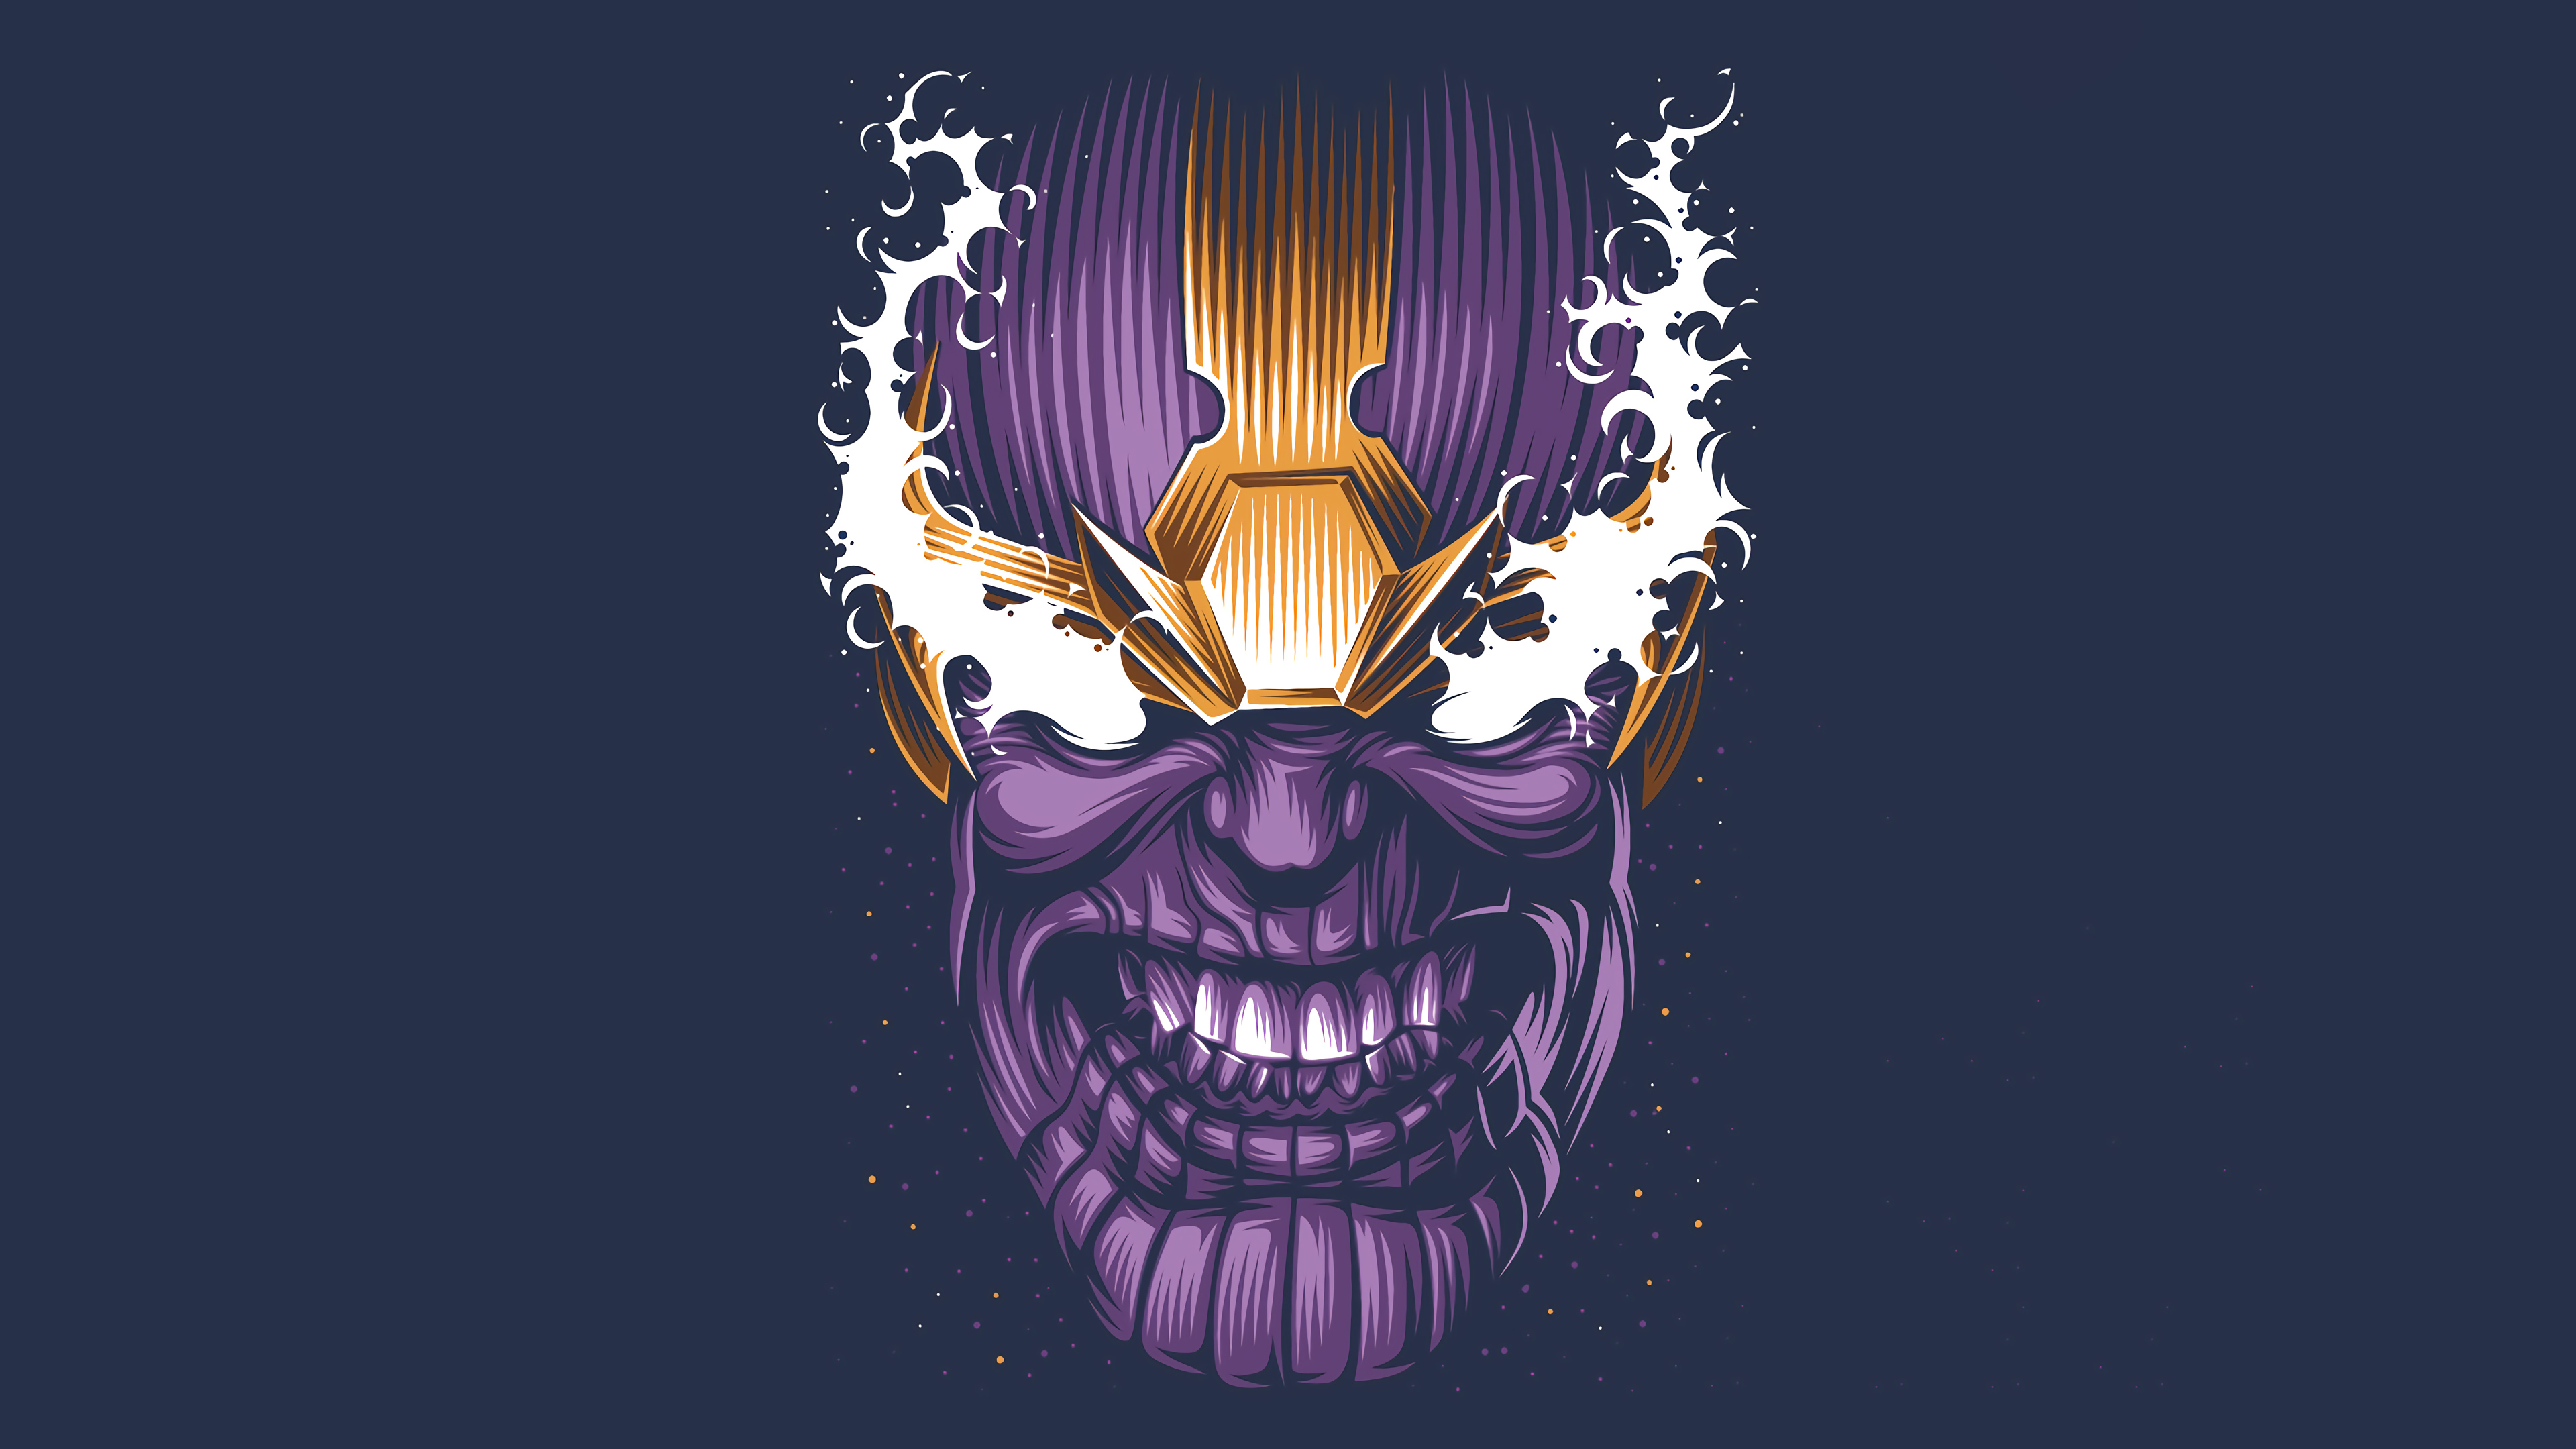 Thanos 4k Ultra HD Wallpaper by Aleksey Rico